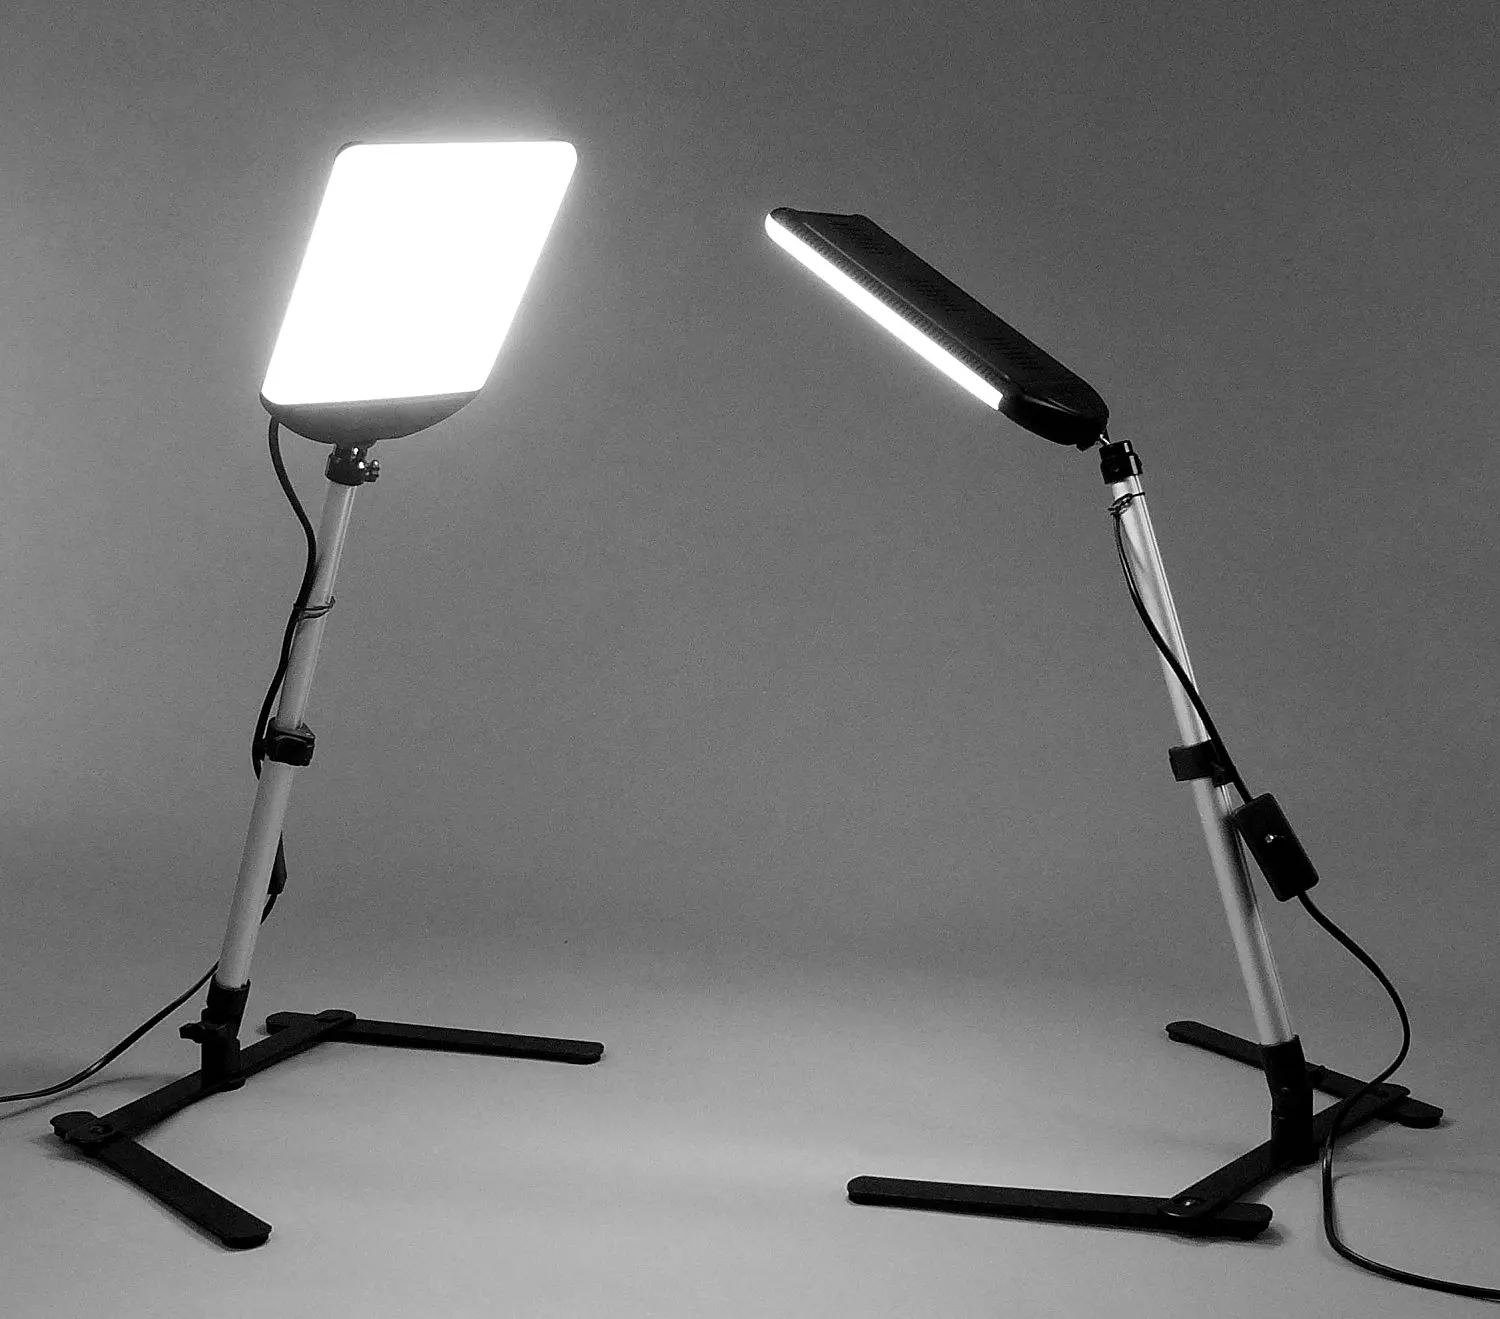 HAKUTATZ 100 x 100 x 100 cm LED Professional Photography Light Tent 